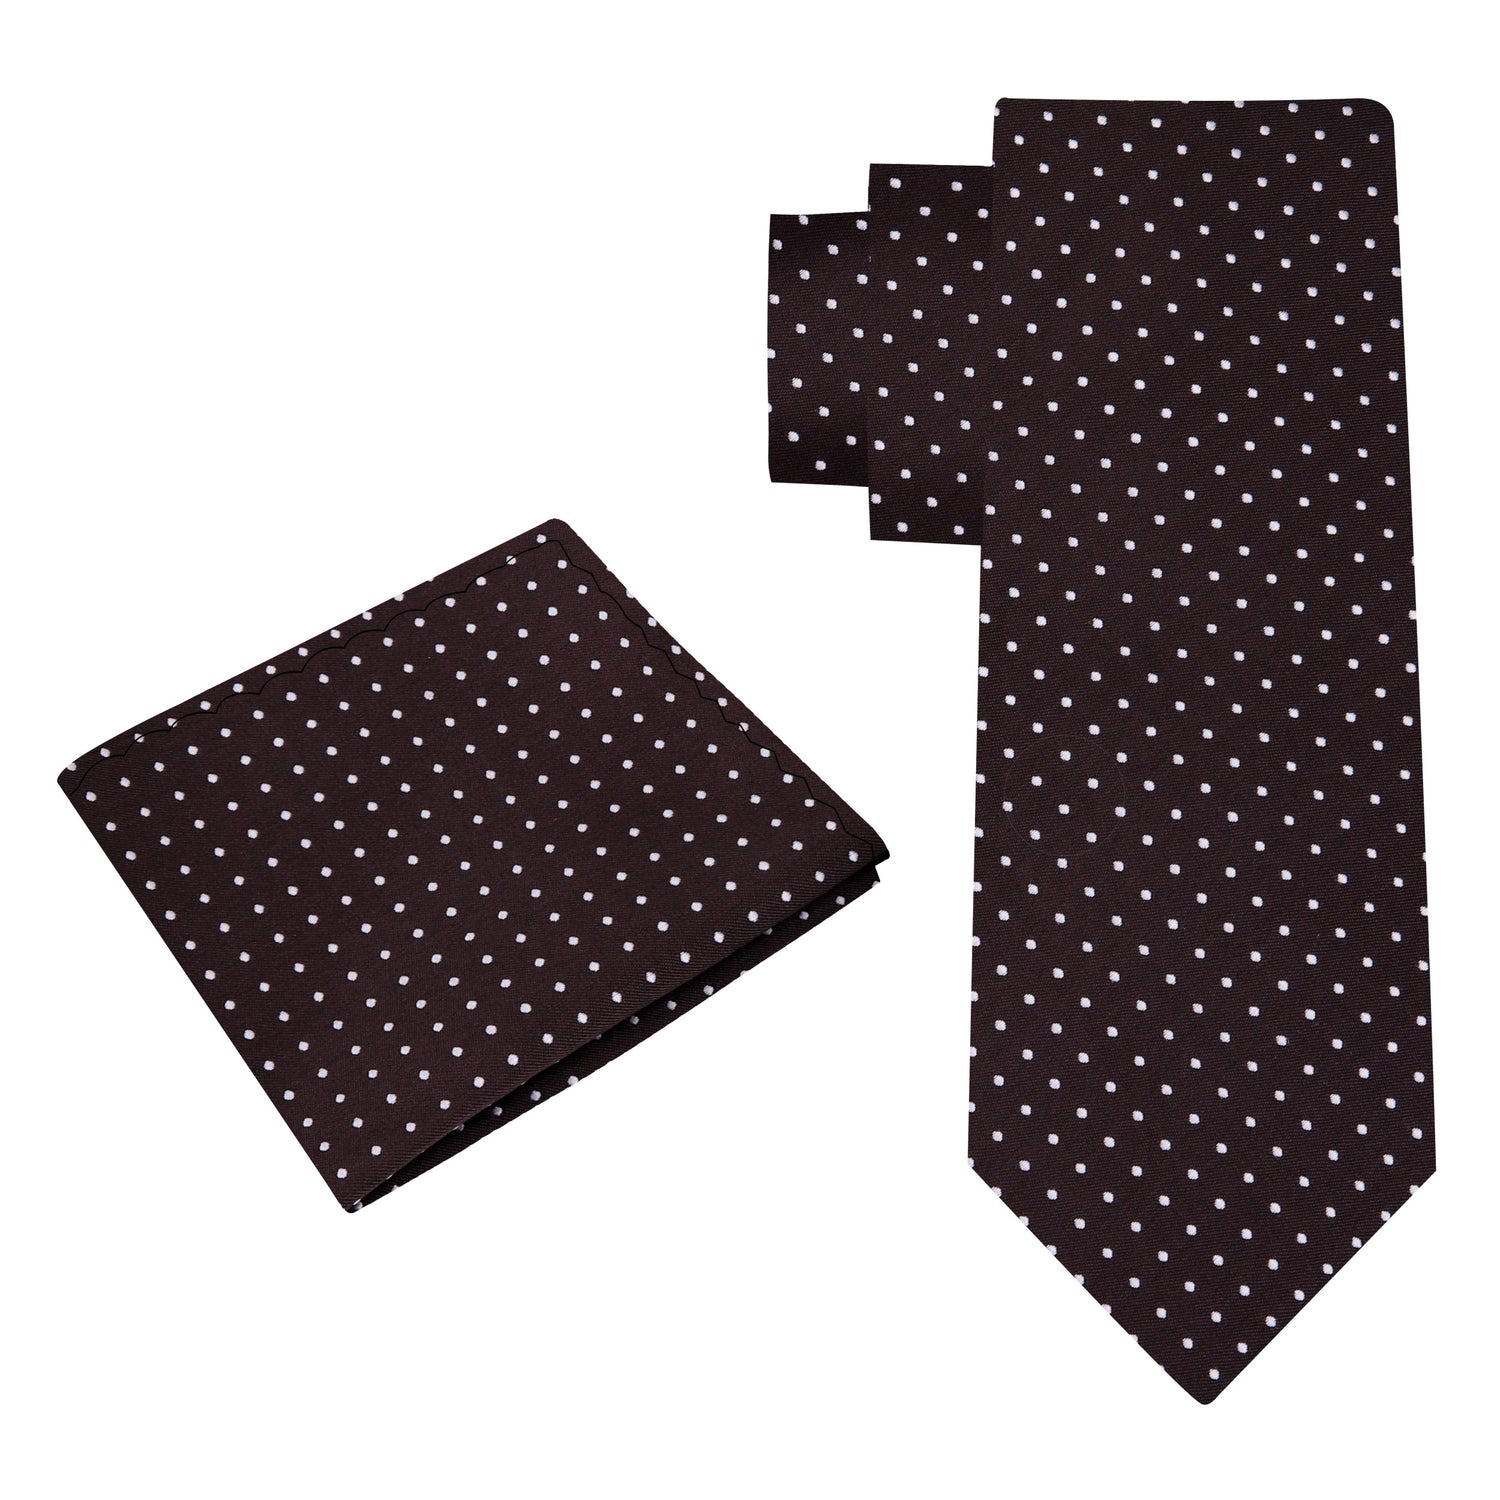 Alt View A Brown, White Polka Dot Pattern Silk Necktie and Square